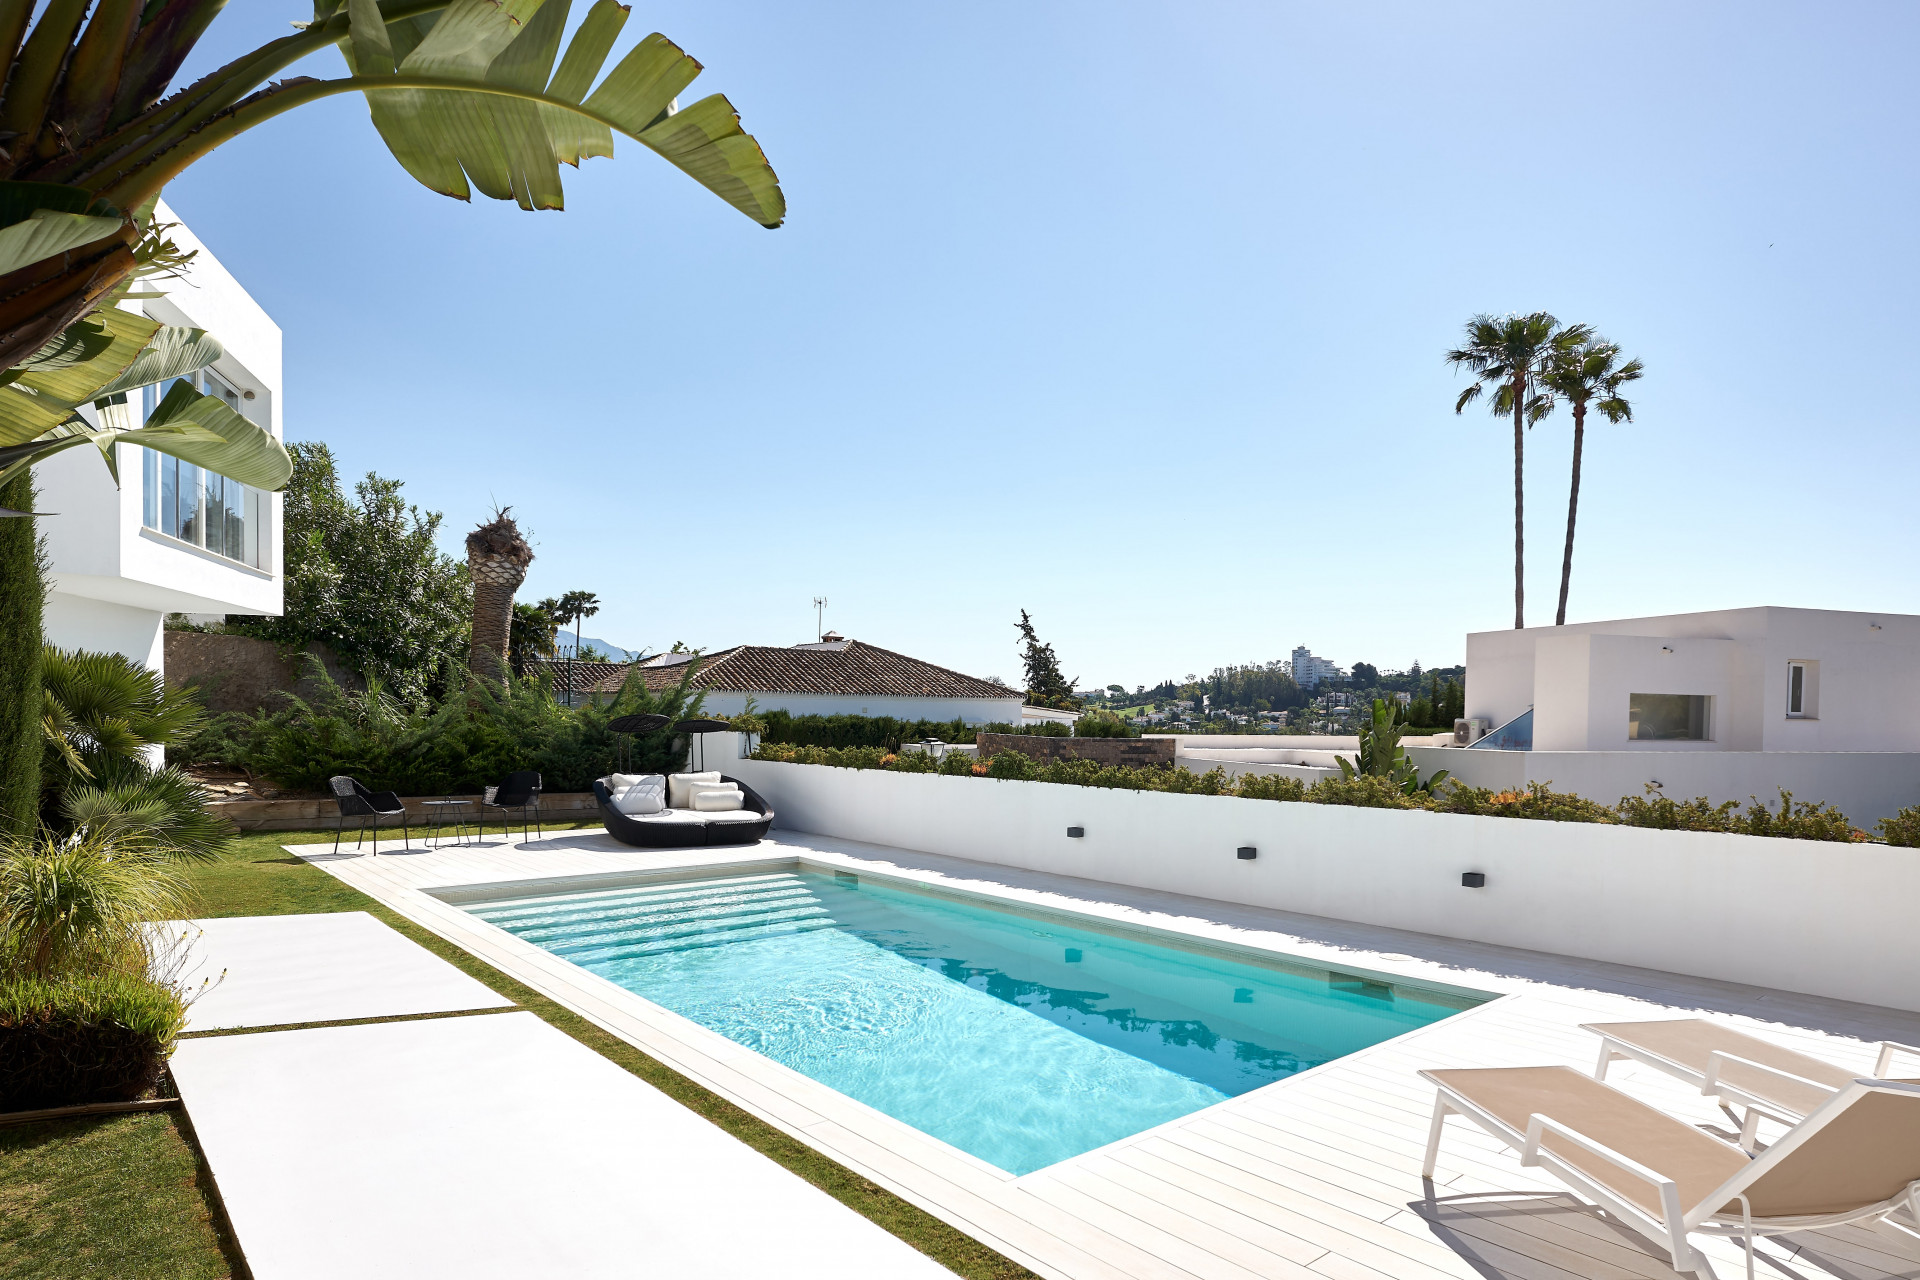 Recently updated contemporary villa is located in El Paraiso